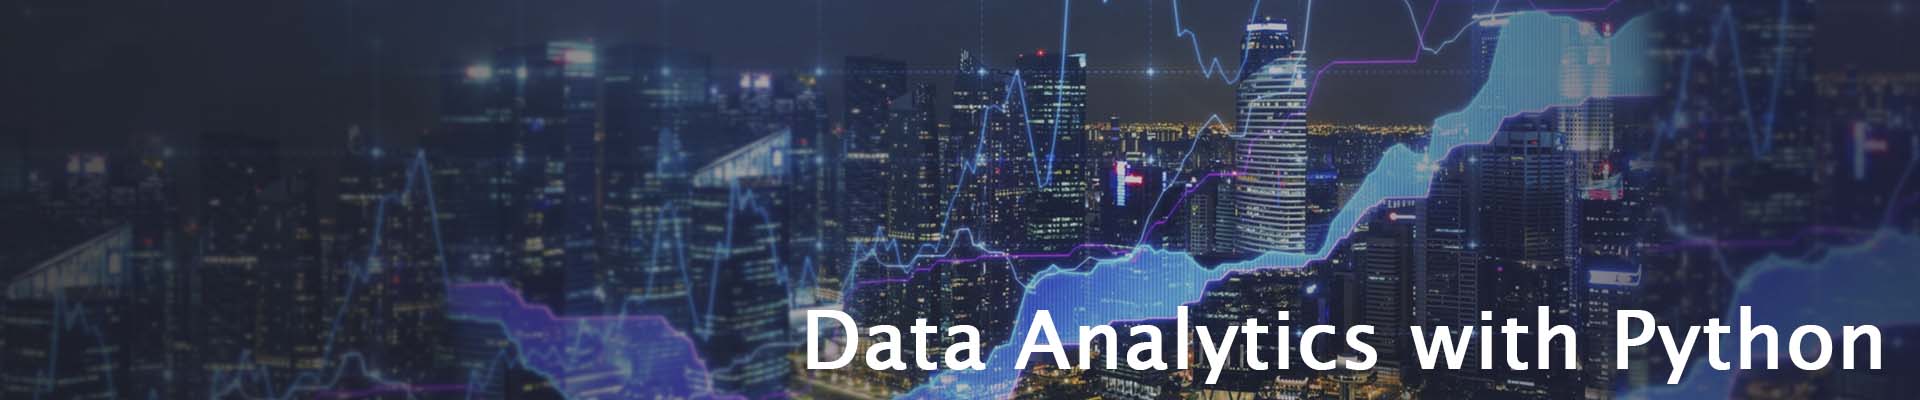 Data Analysis with Python Training